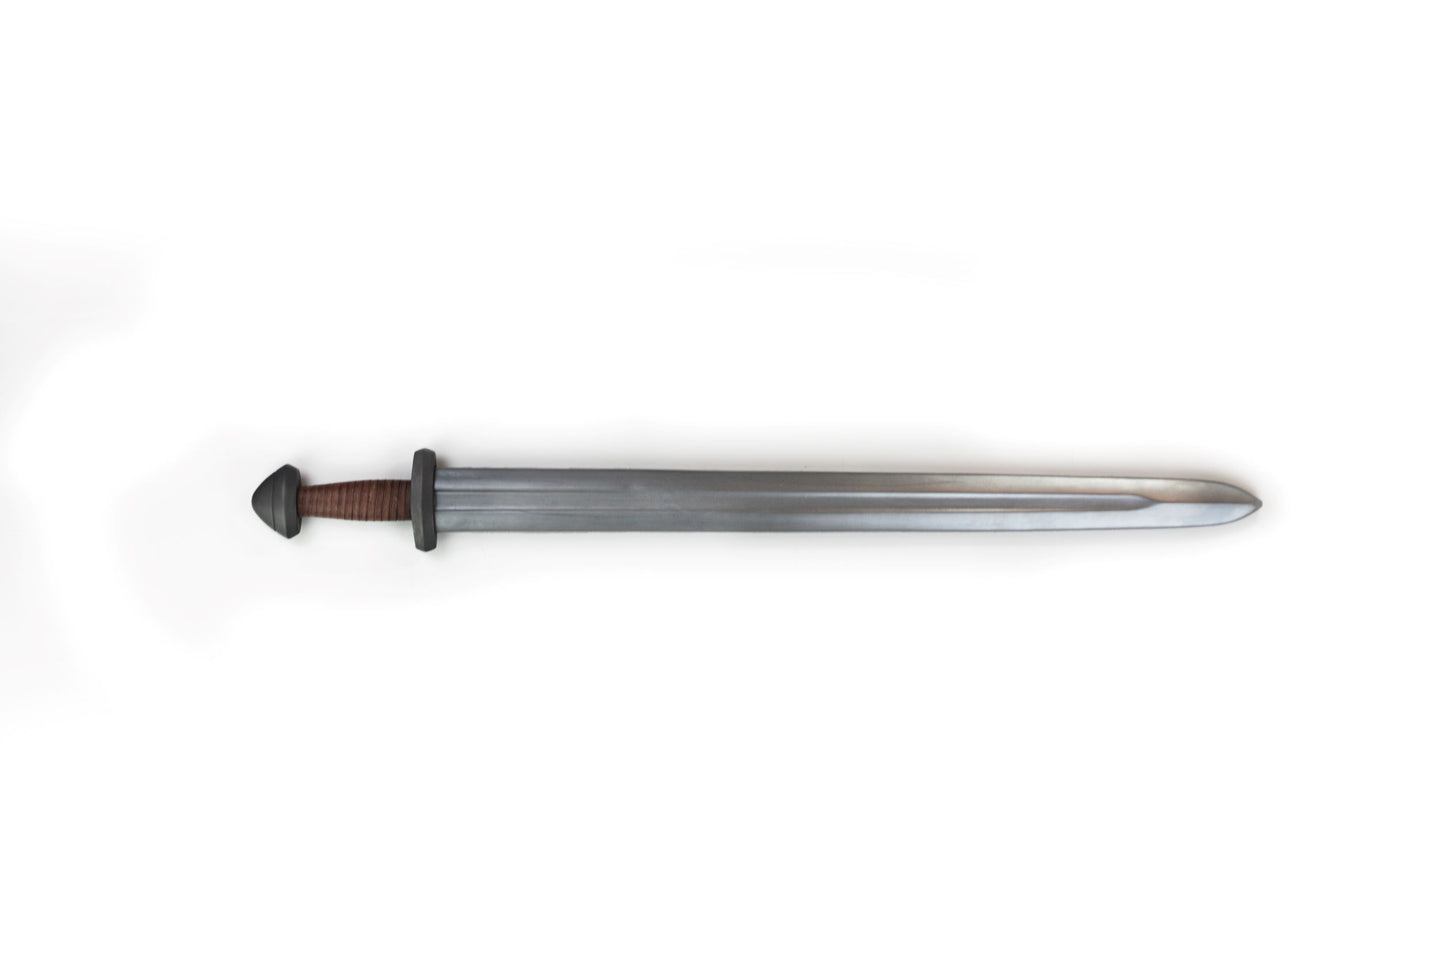 Viking sword- type H - ready to ship